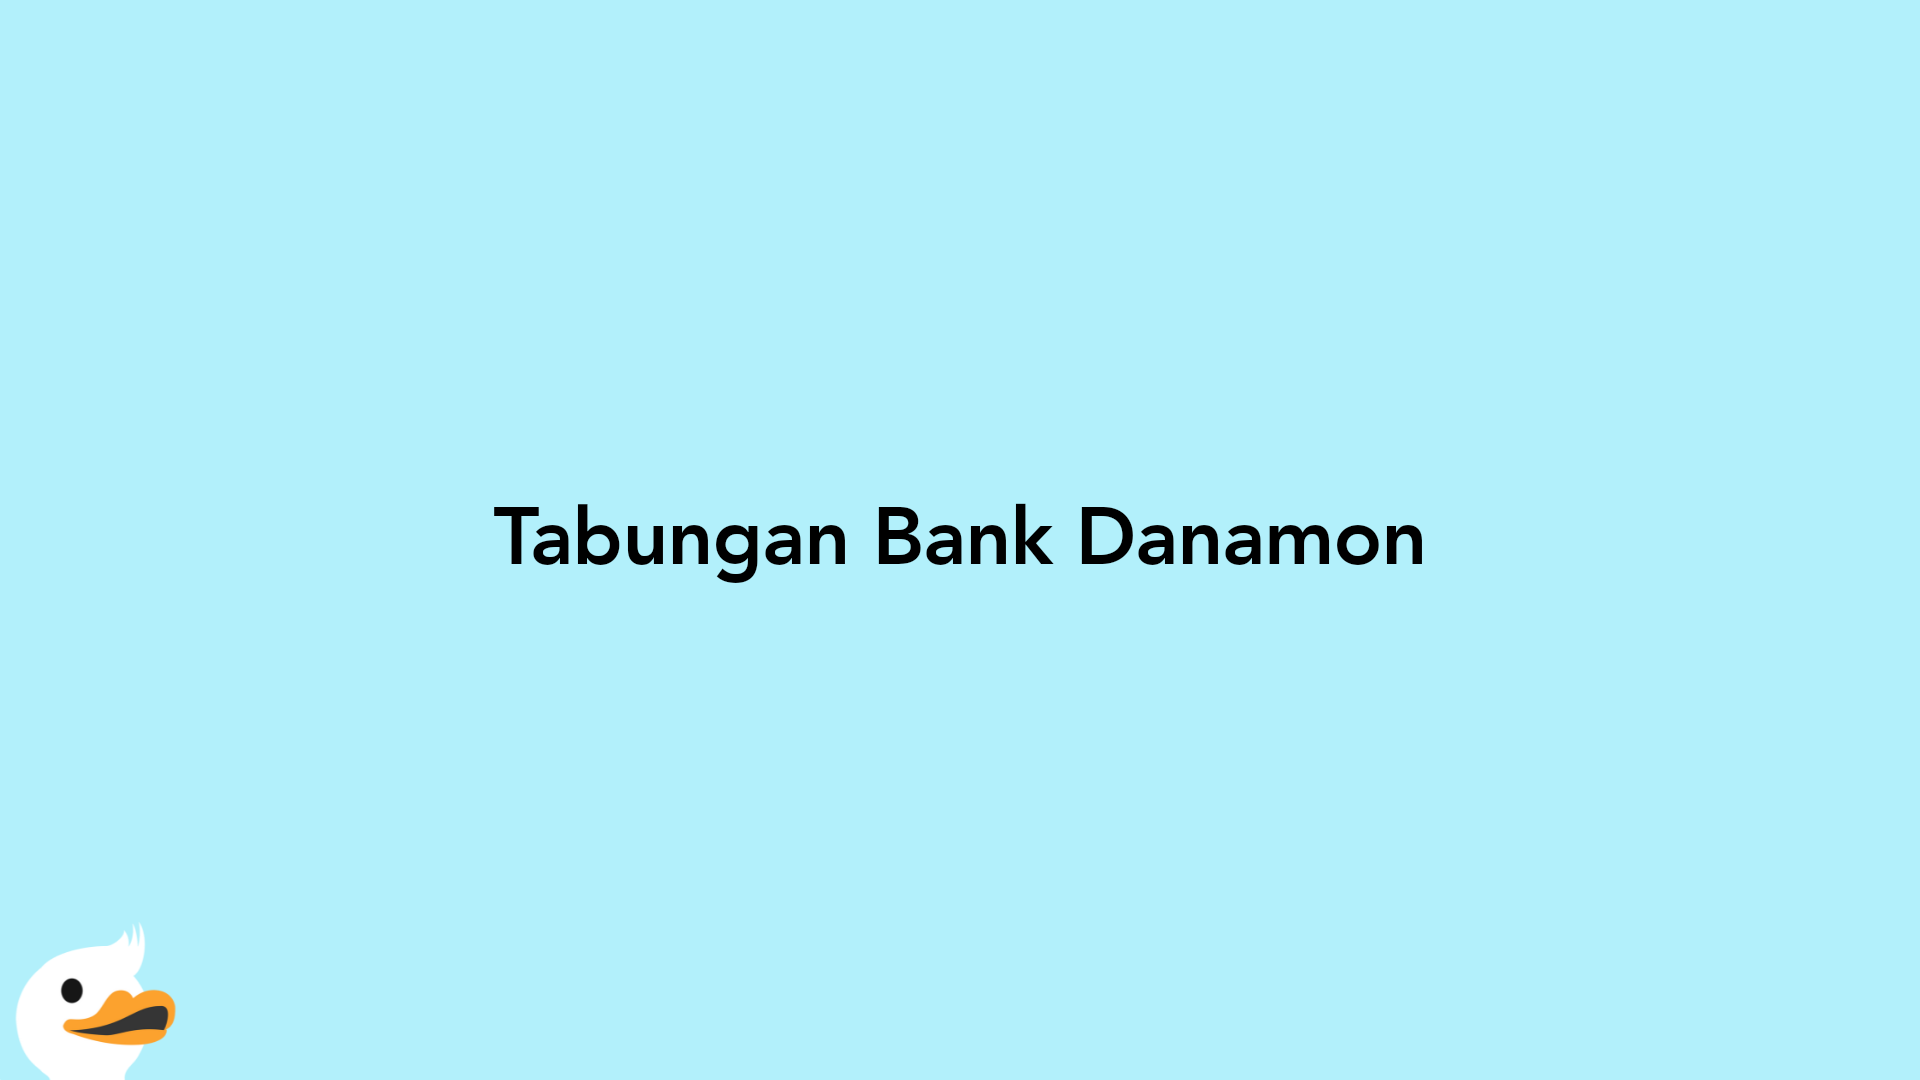 Tabungan Bank Danamon